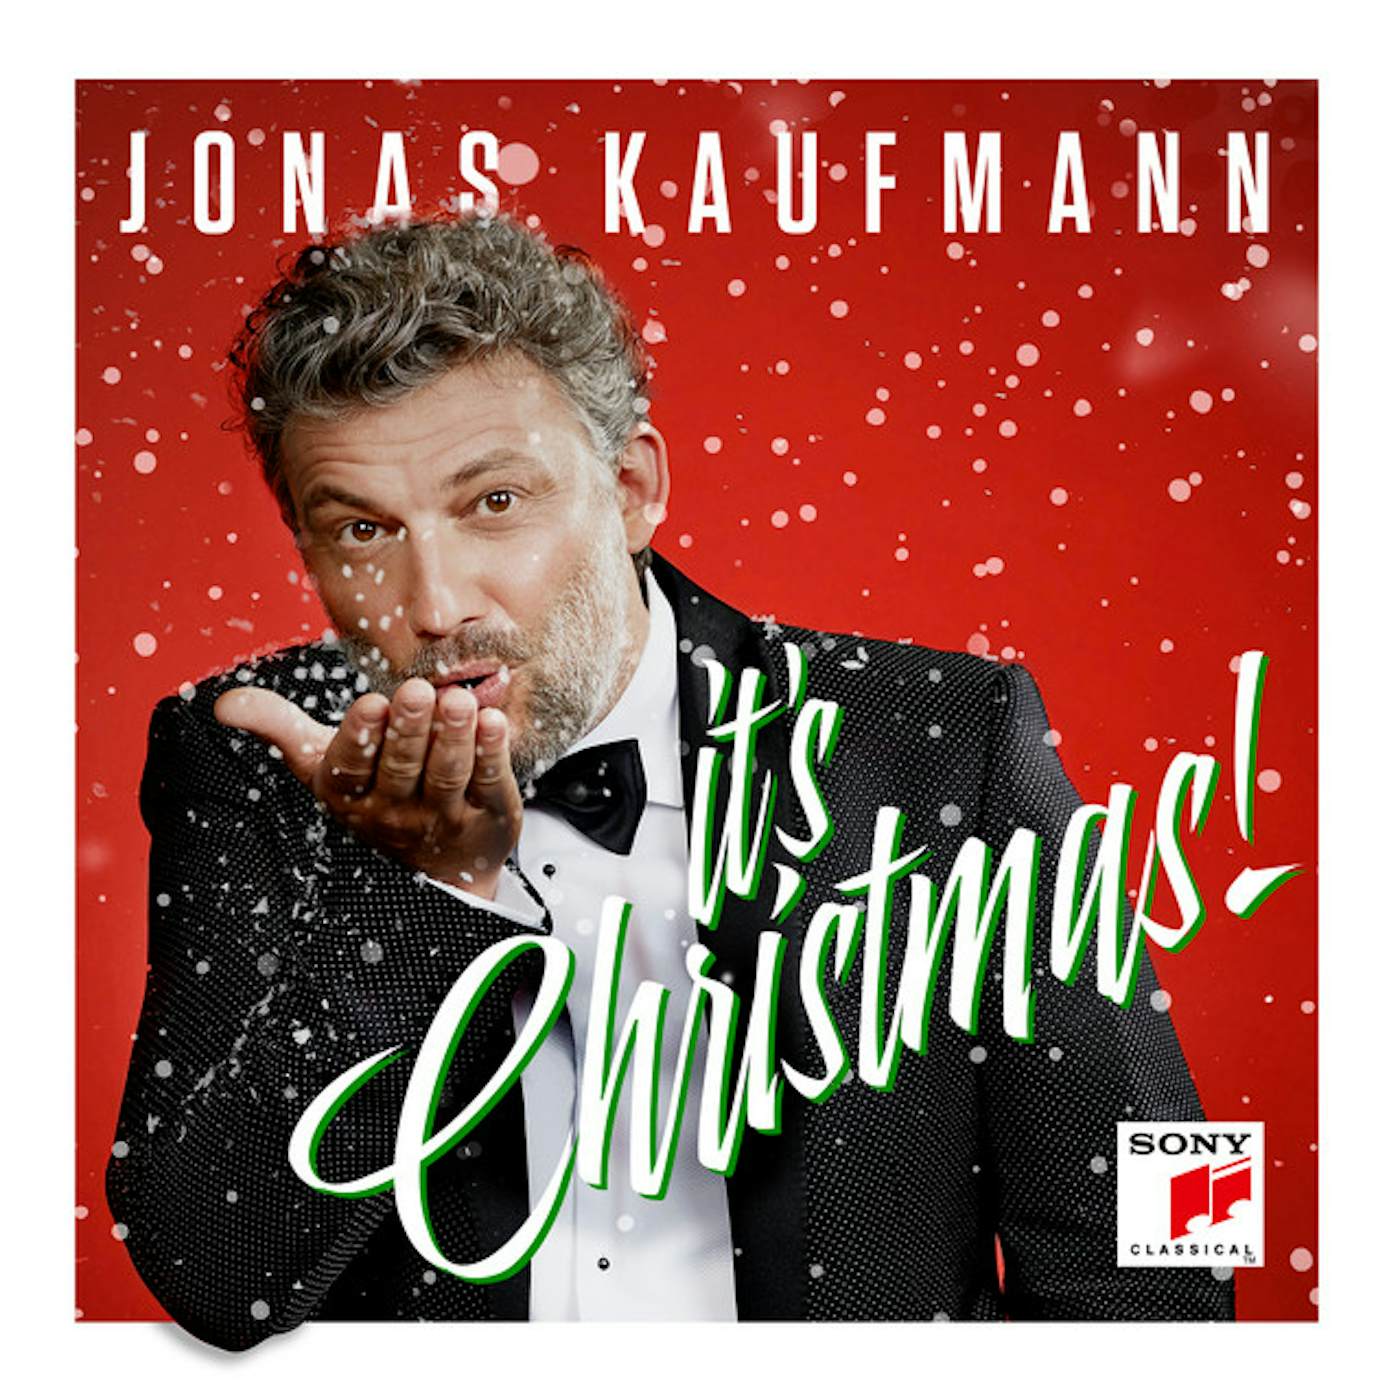 Jonas Kaufmann IT'S CHRISTMAS Vinyl Record